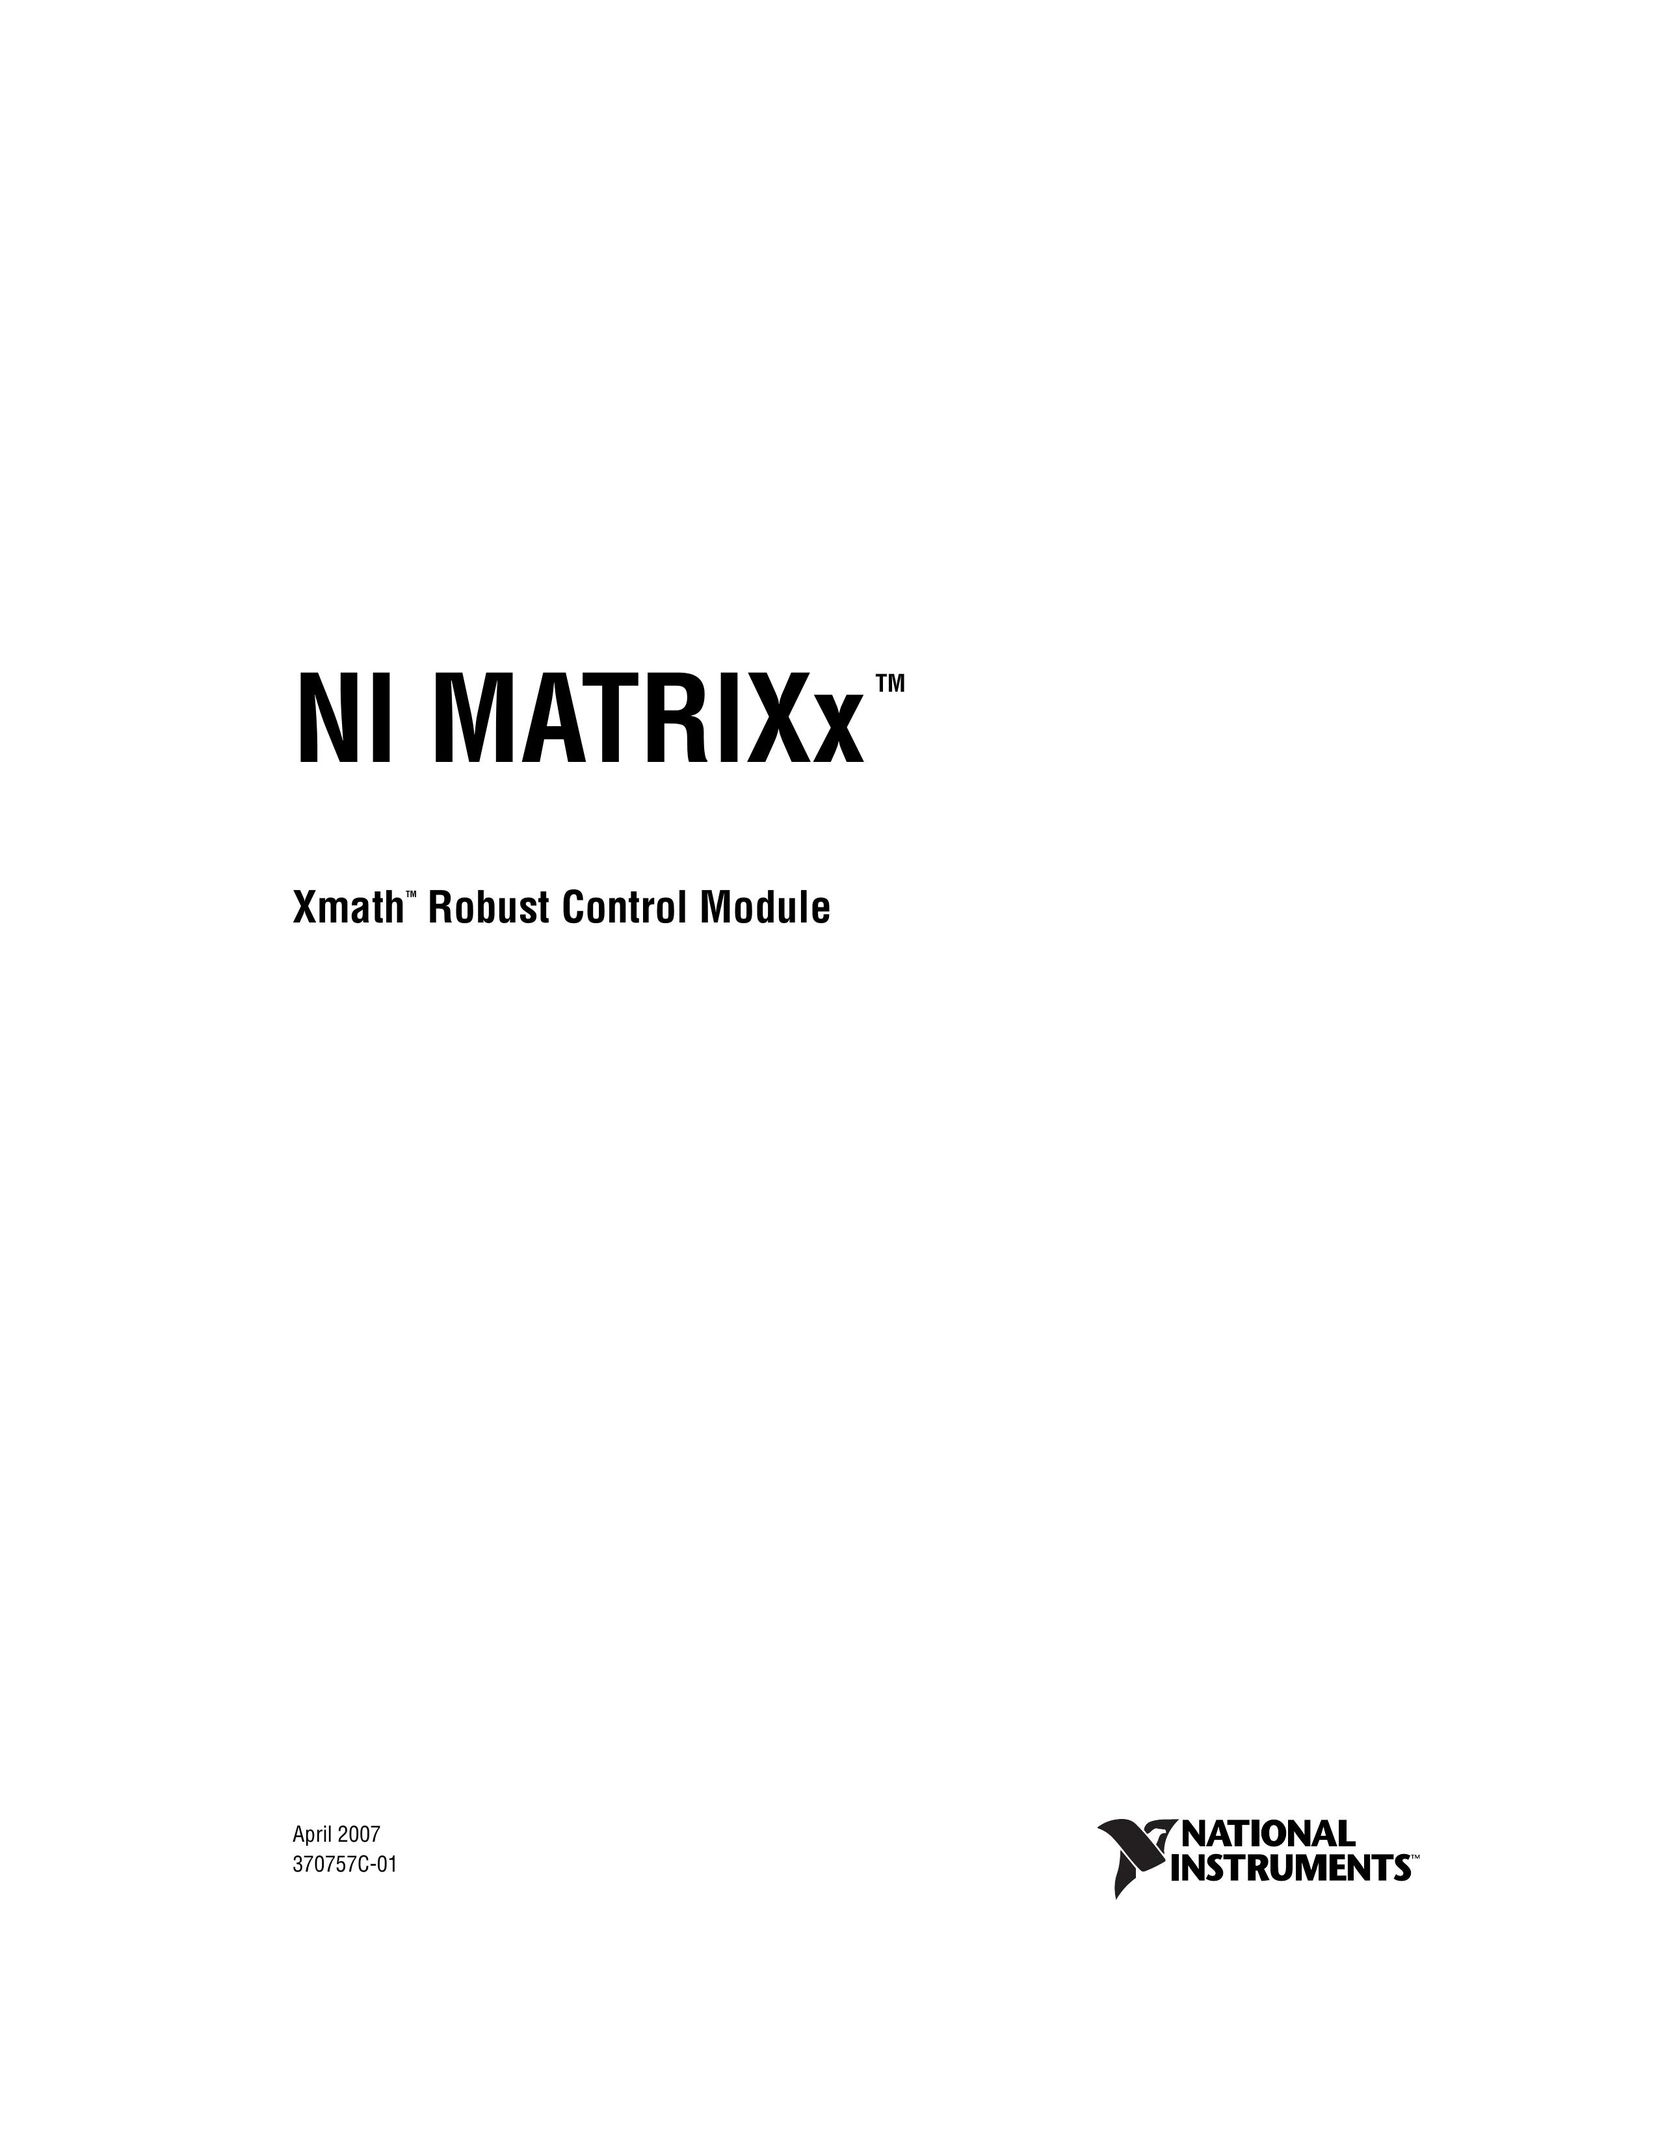 National Instruments NI MATRIX Xmath Robust Control Module Computer Accessories User Manual